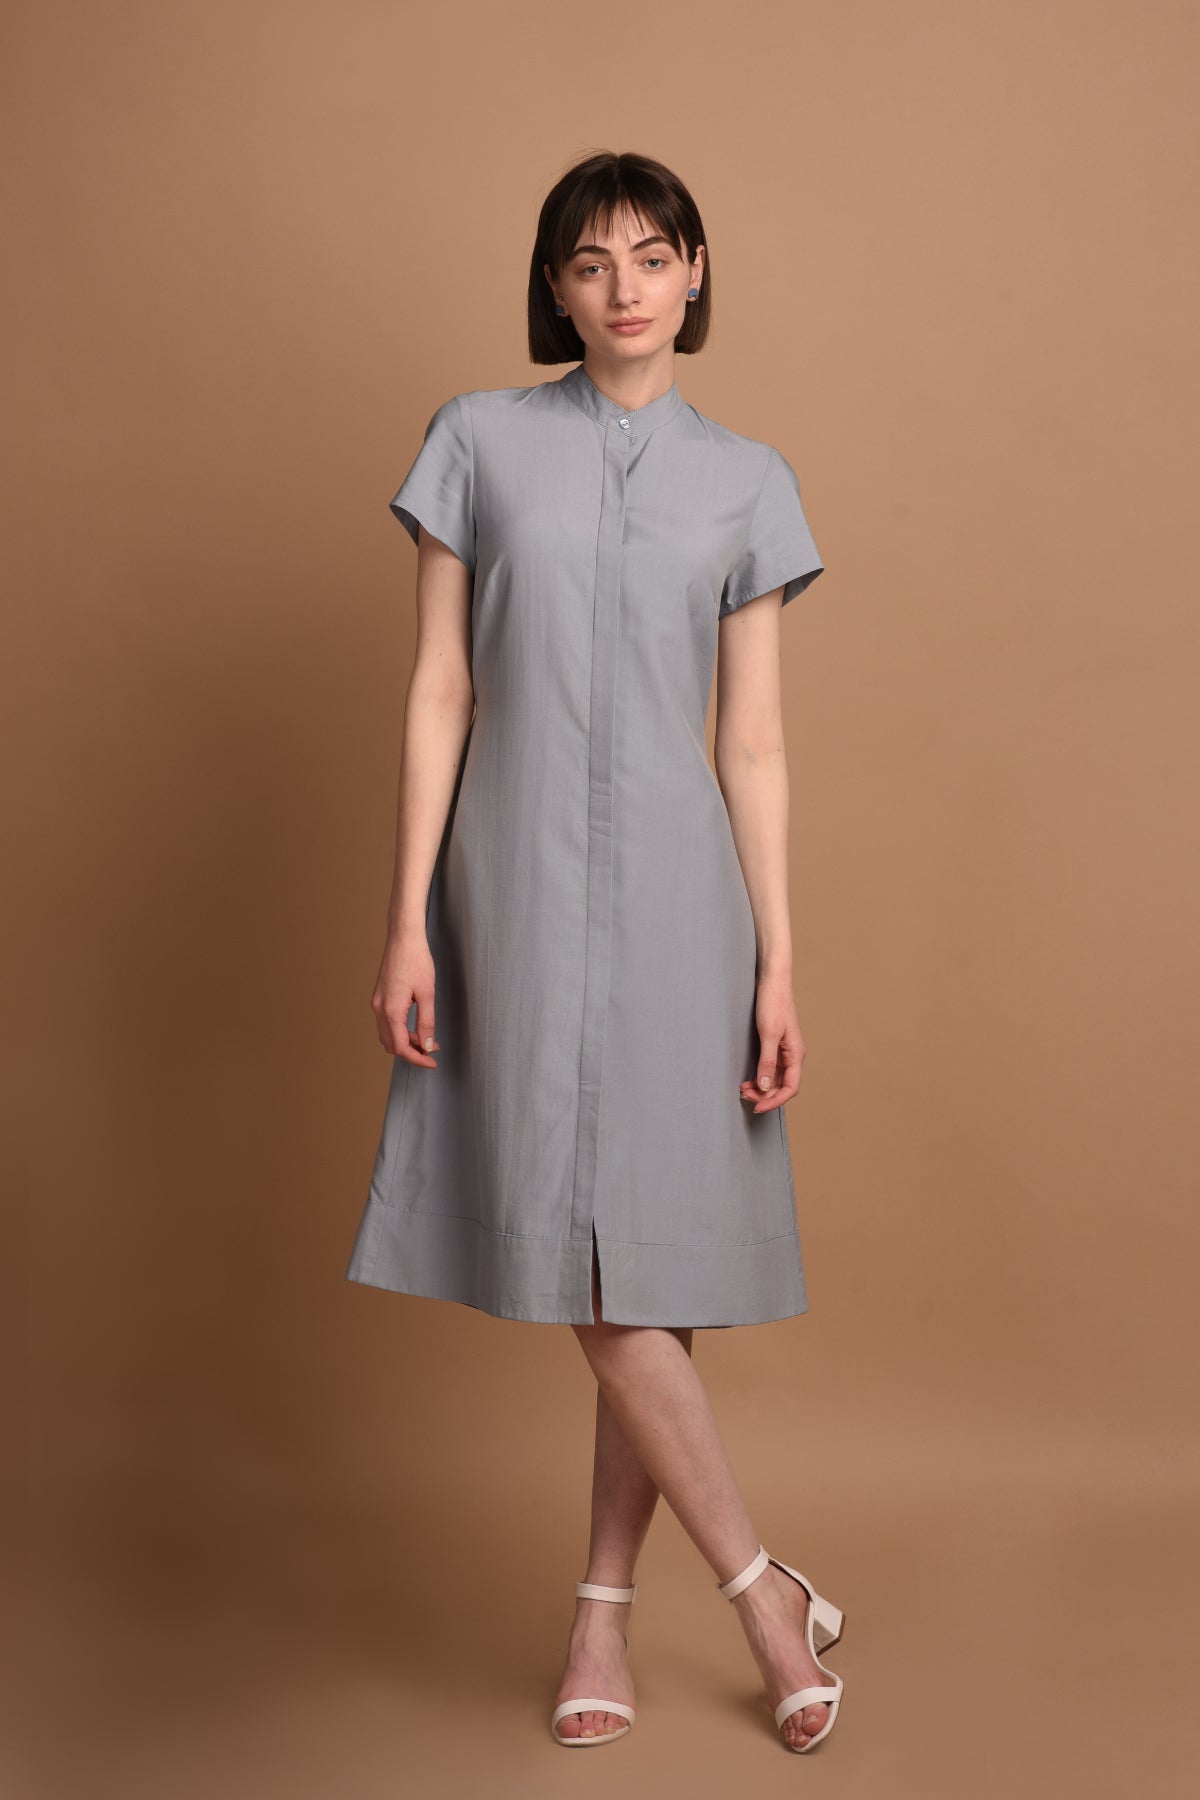 Light blue, short-sleeved shirt dress Melanie made of Tencel by Ayani